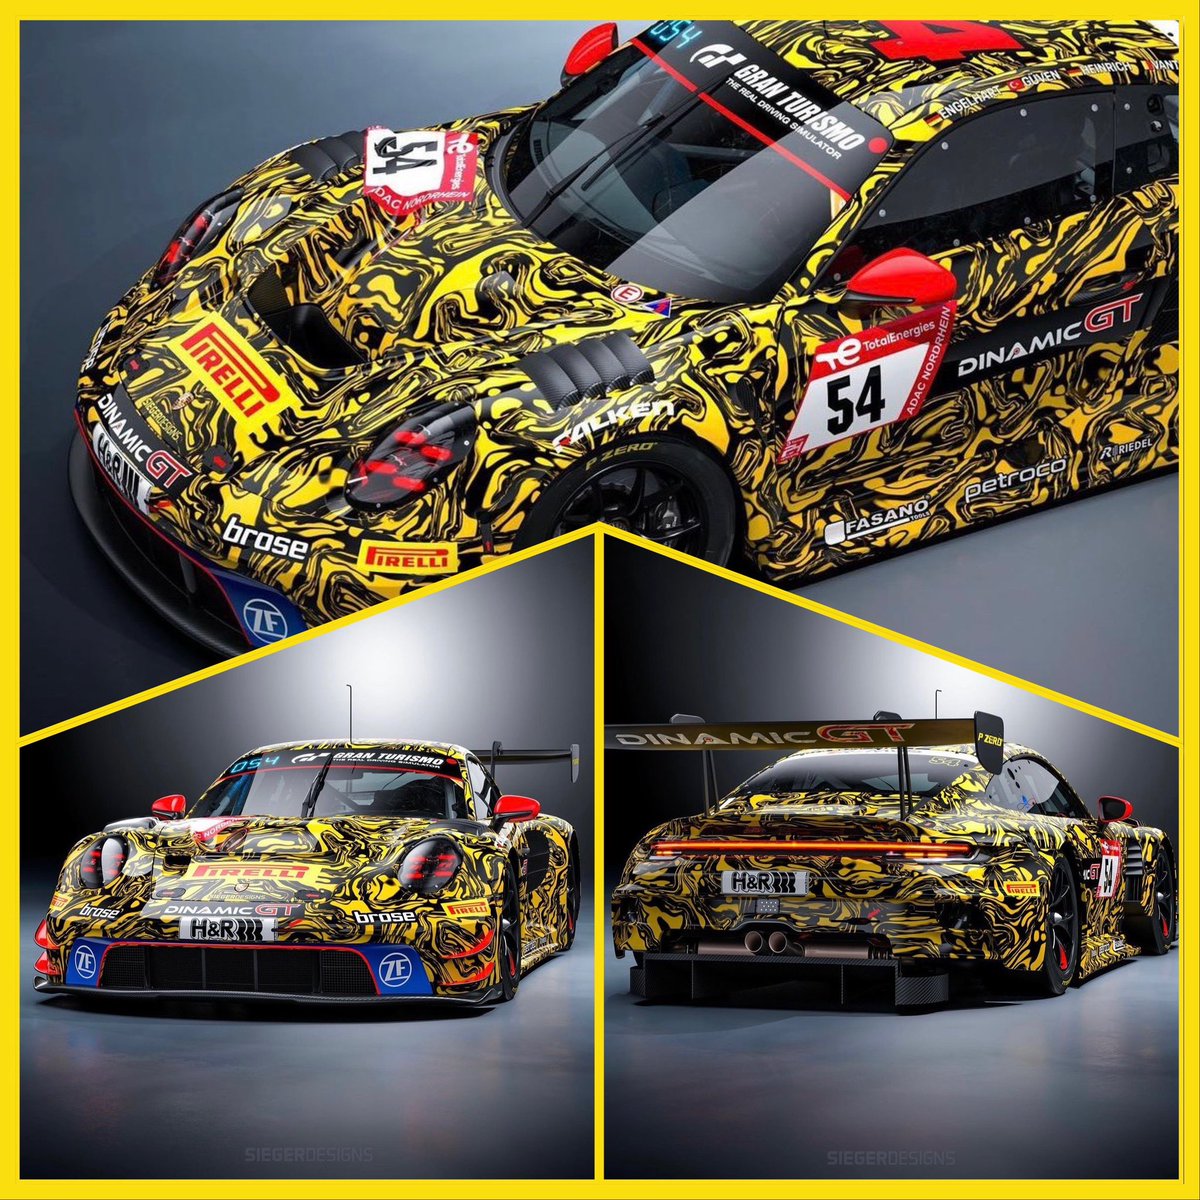 This weekend we are going to follow @dinamicmotors #Car54 & there progress throughout the #24hNBR with @VanthoorLaurens @AyhancanGuven @laurinheinrich_ & @EngelhartChris #PorscheOnTrack #Nurburgring 

#PorscheMotorRacing